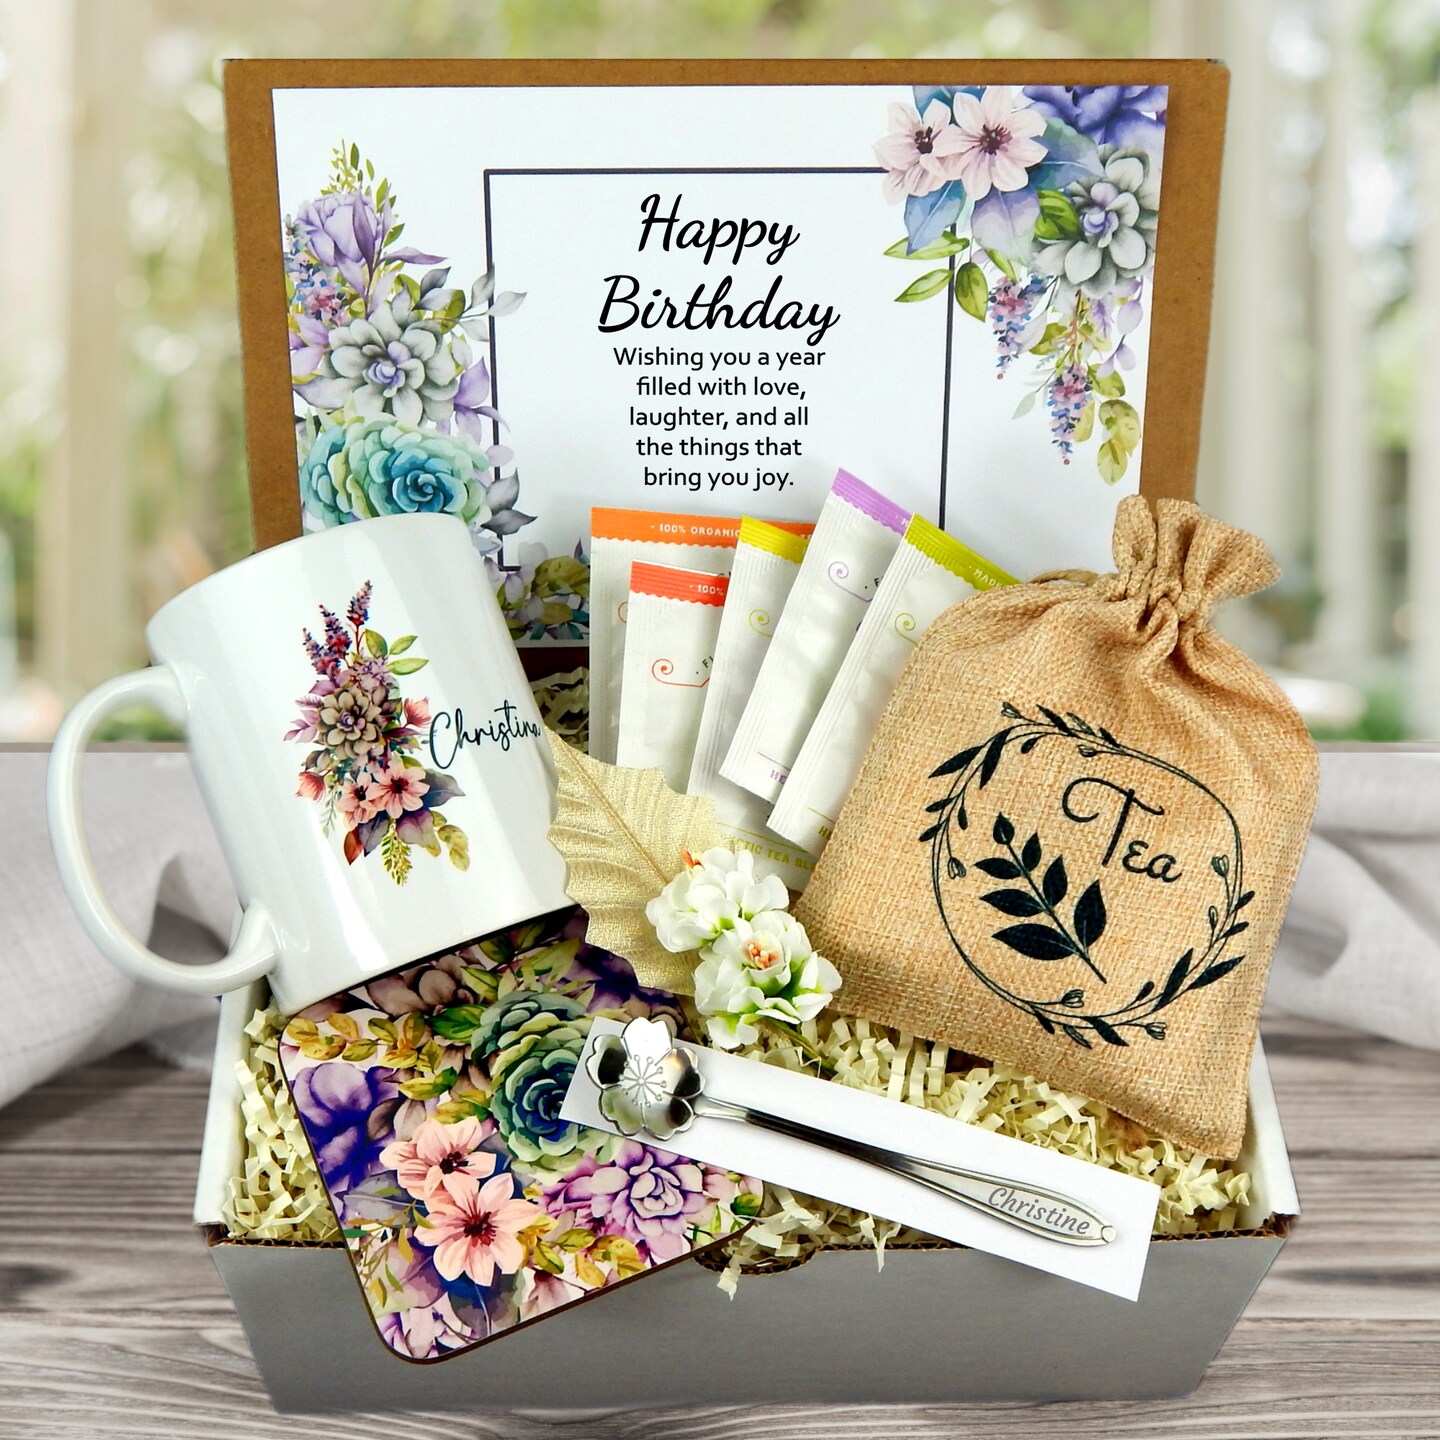 Personalized Espresso Mugs - Great Birthday Gift